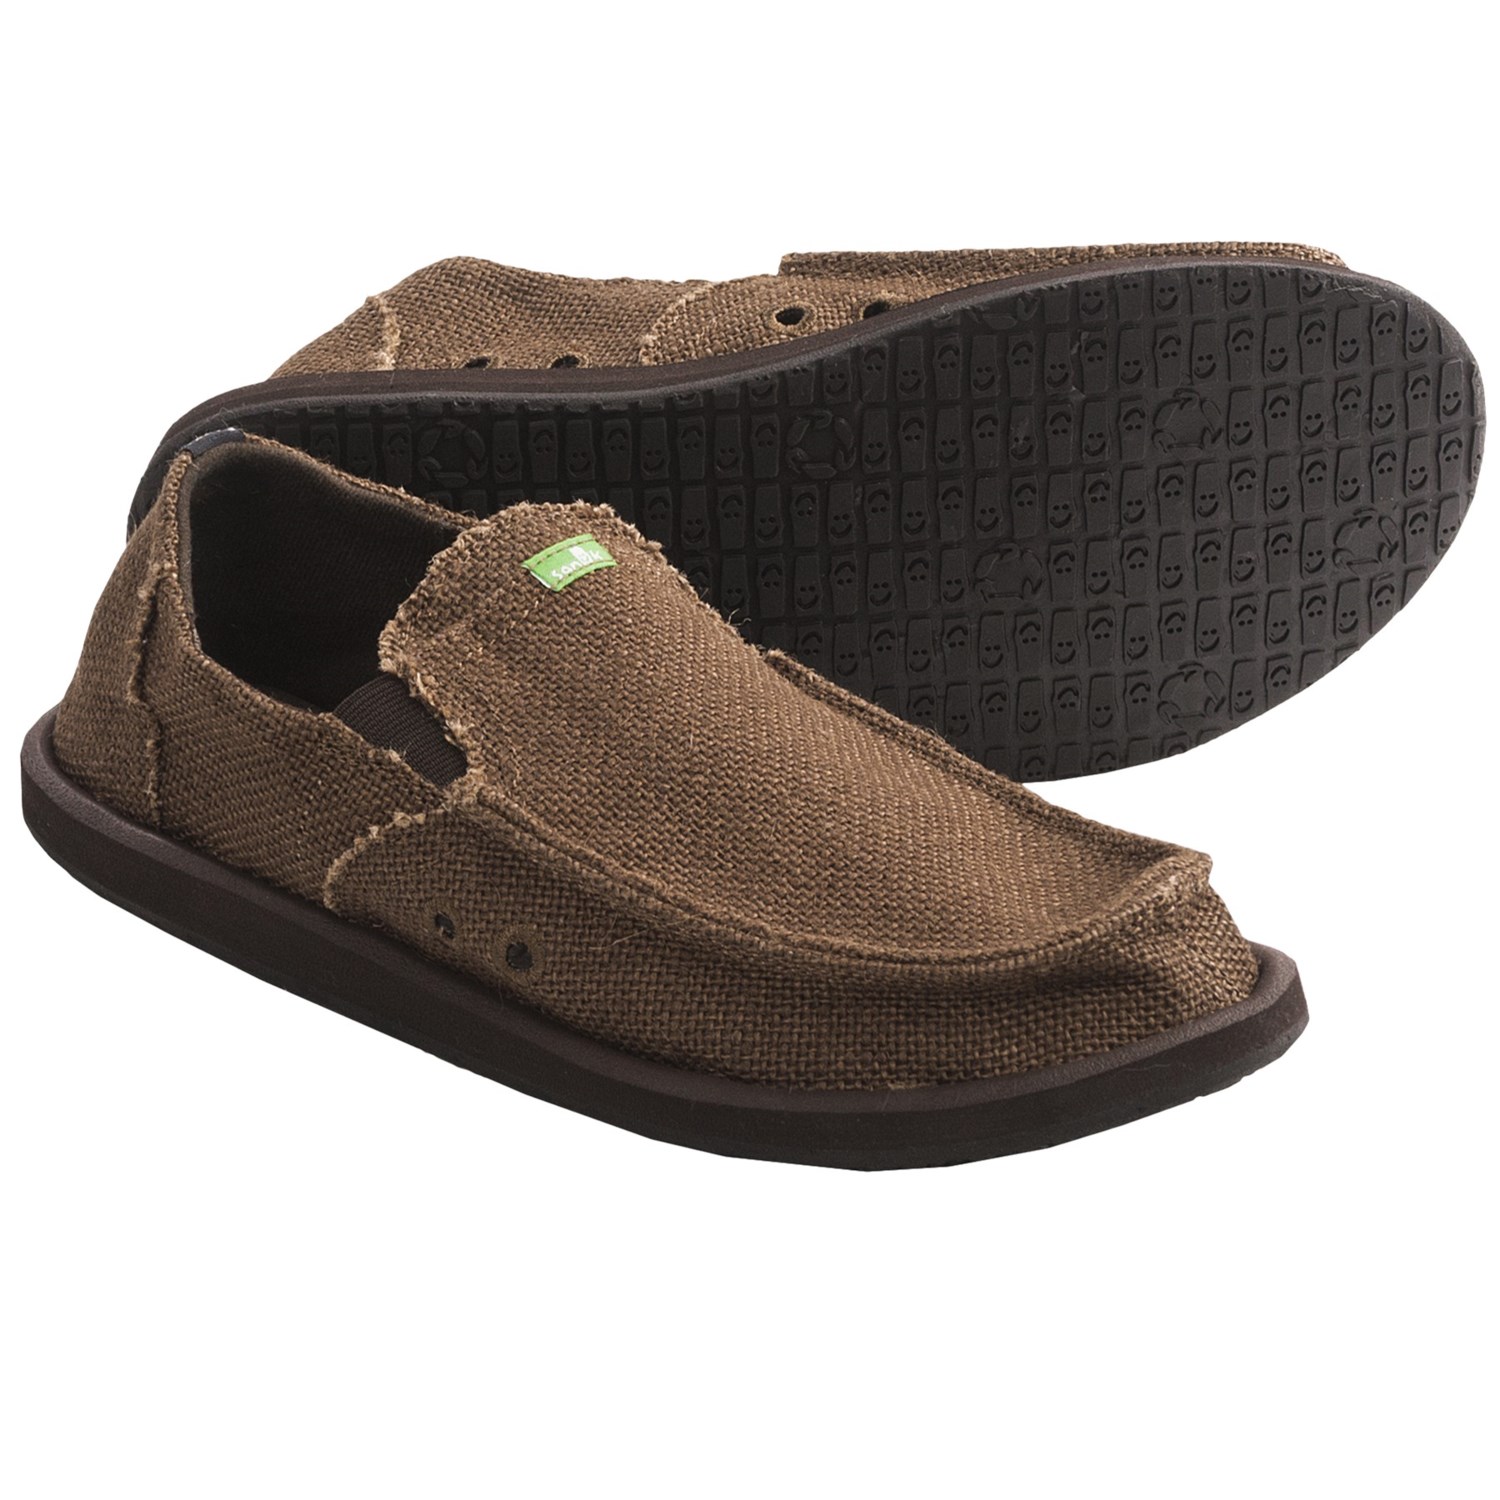 Sanuk Rasta Pouch Shoes - Hemp (For Men) - Save 24%